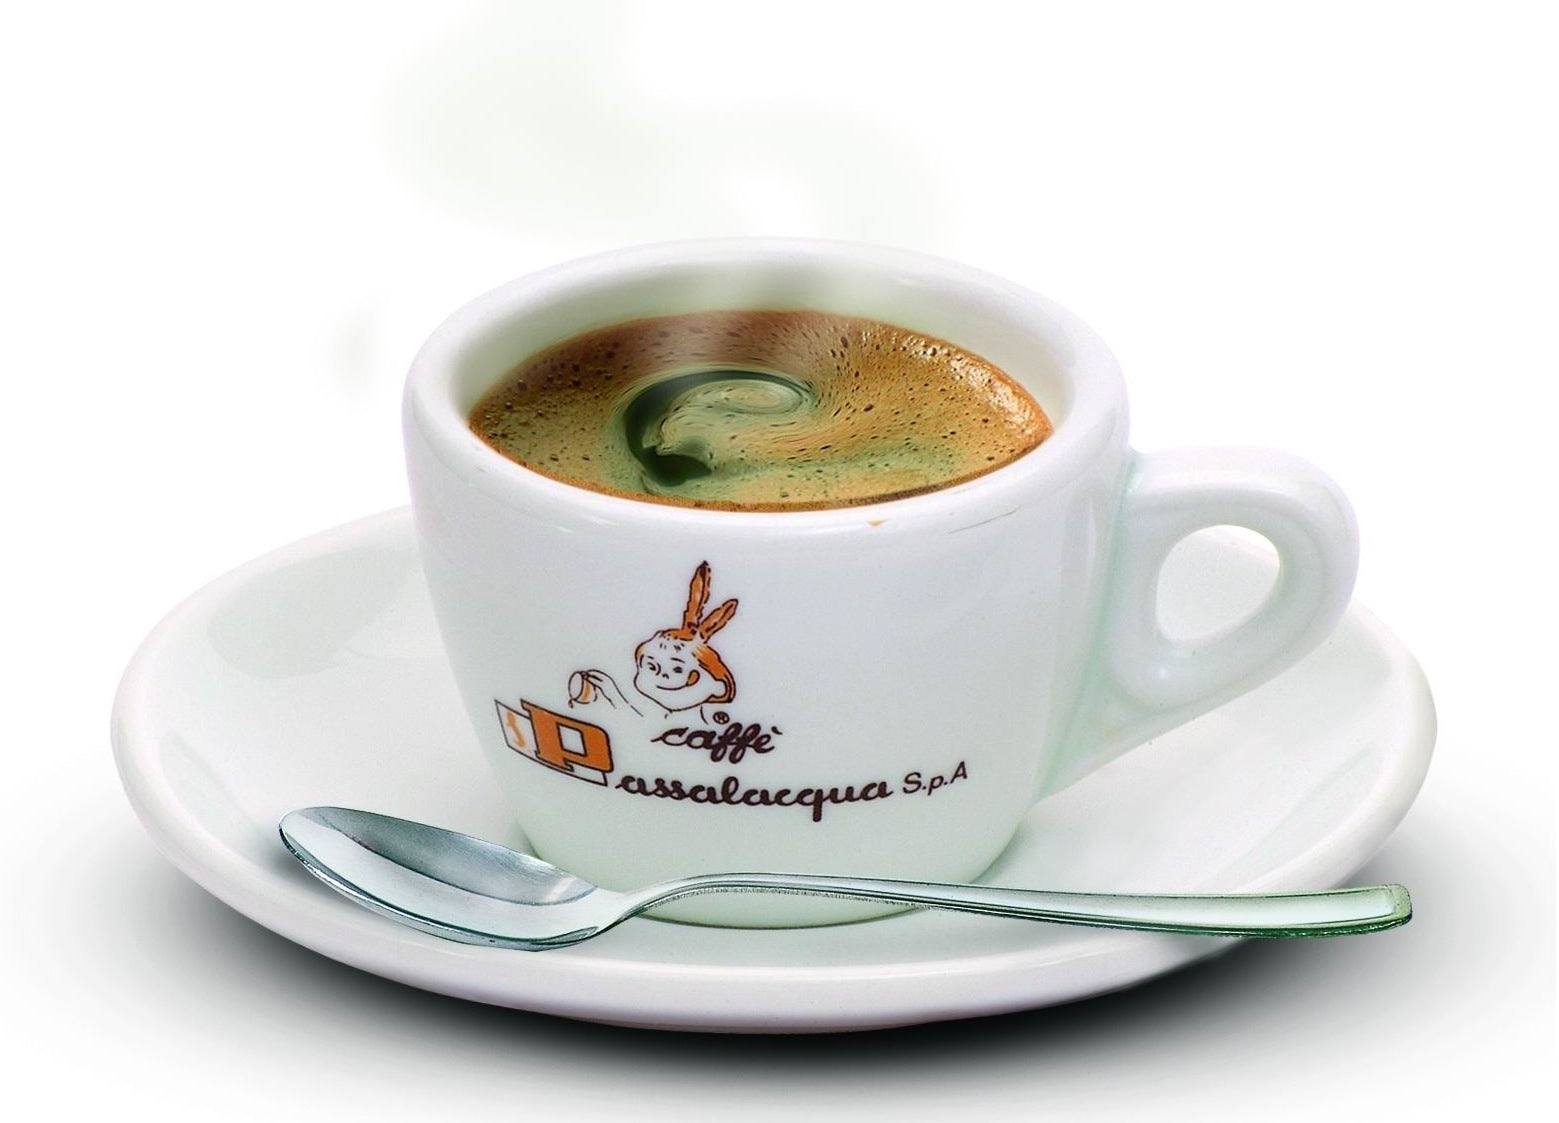 Passalacqua Cremador Espresso Bar jauhettu kahvi